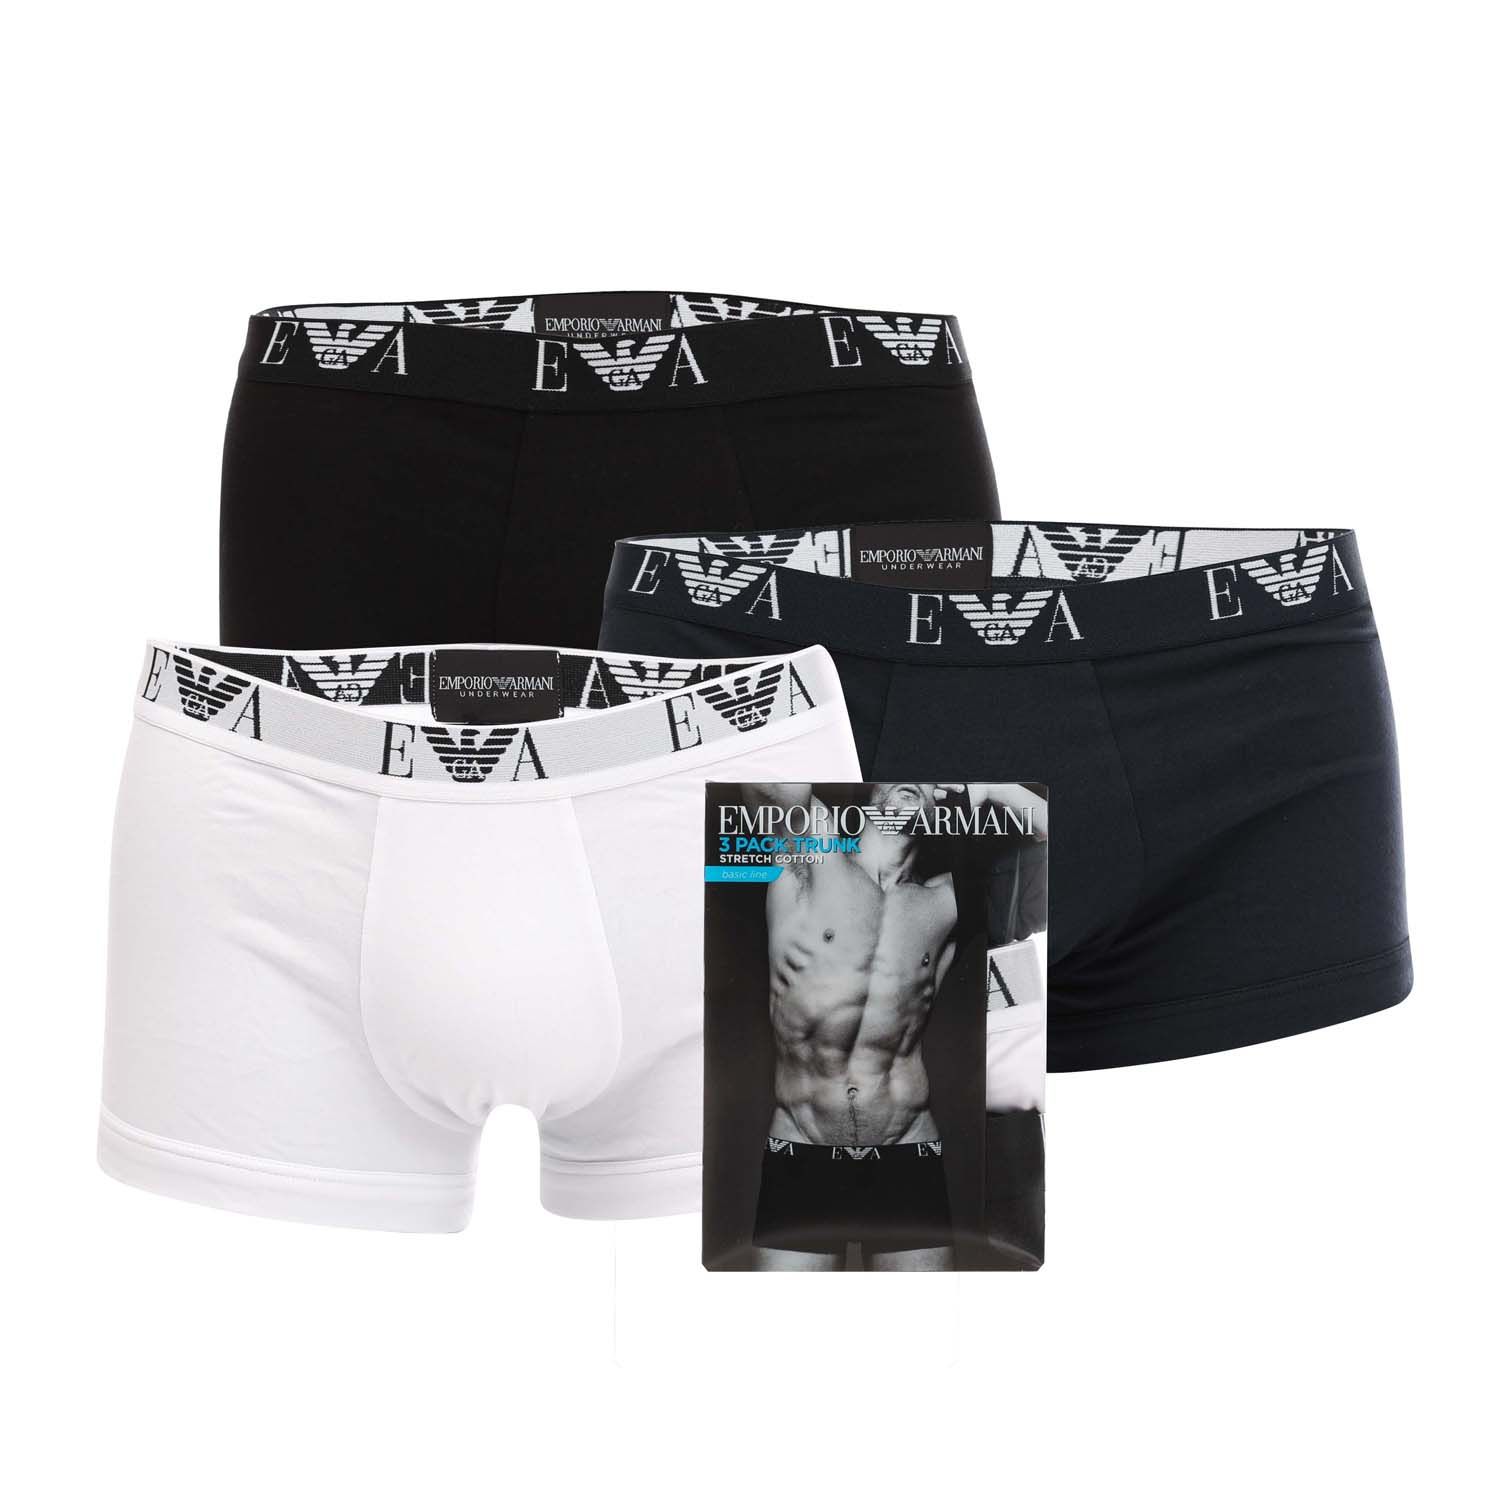 Emporio Armani Black Mens Boxer Underwear